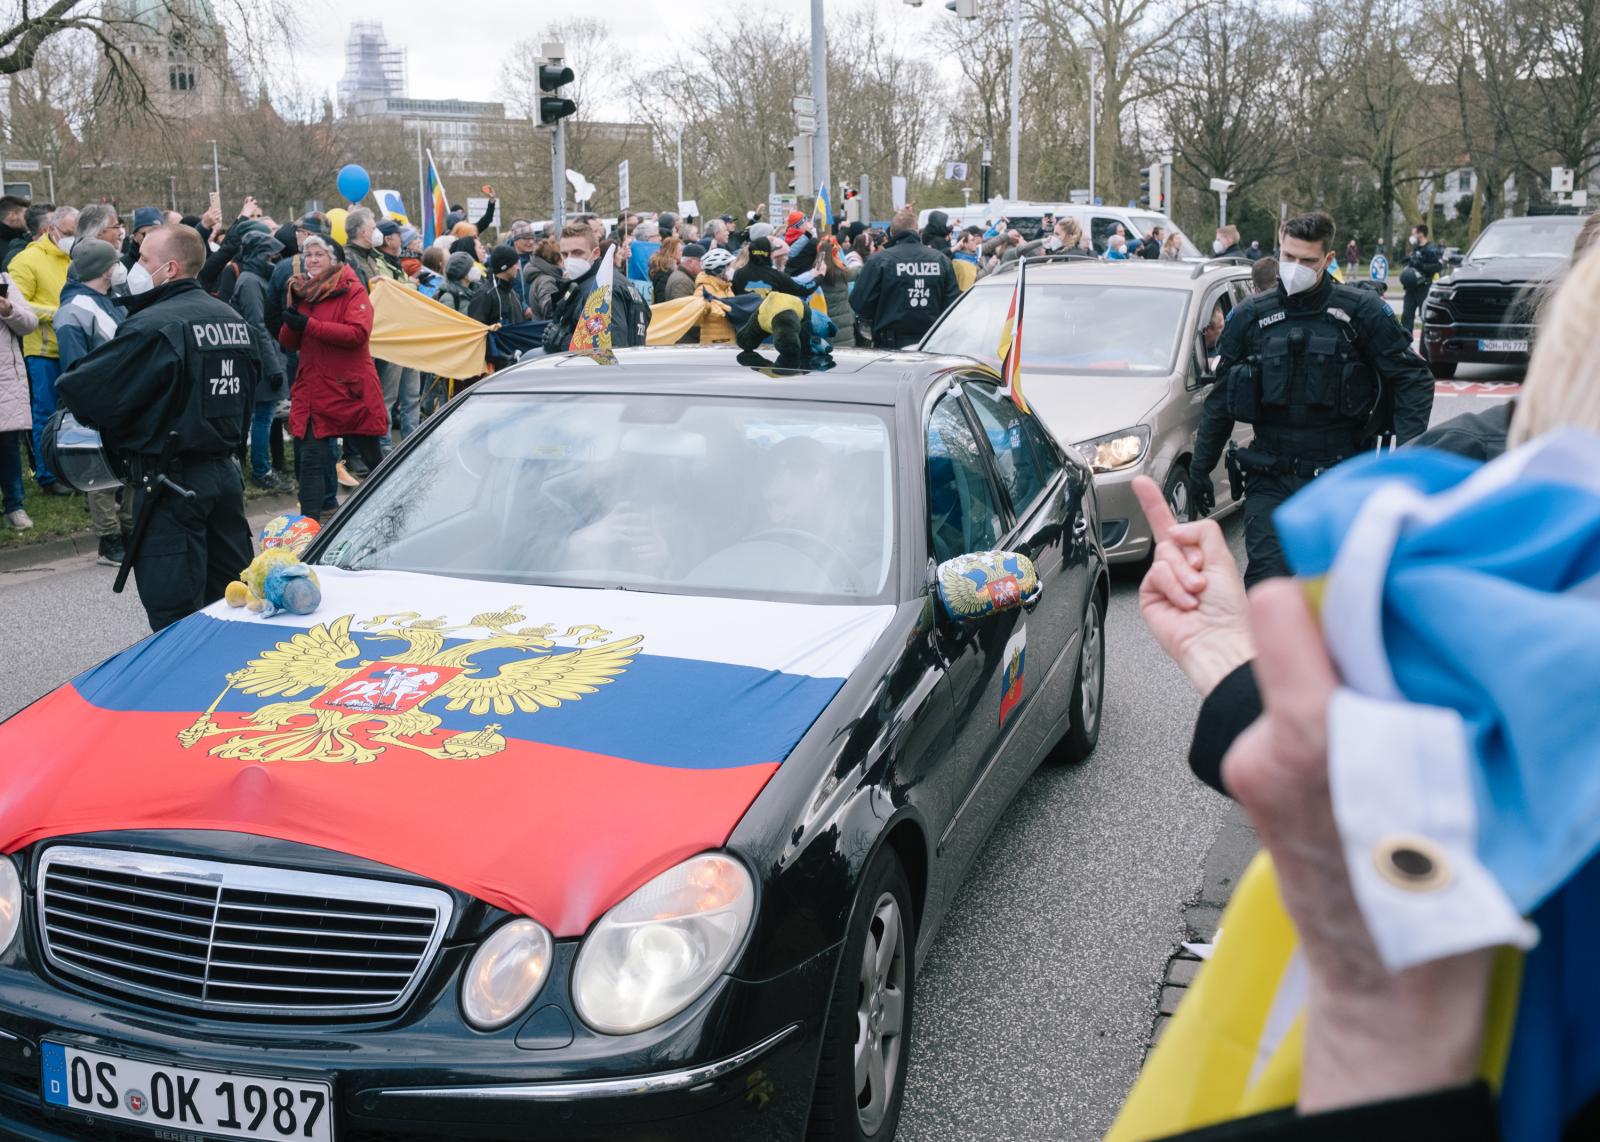 Russian Motorcade in Hanover Blocked | Buy this image